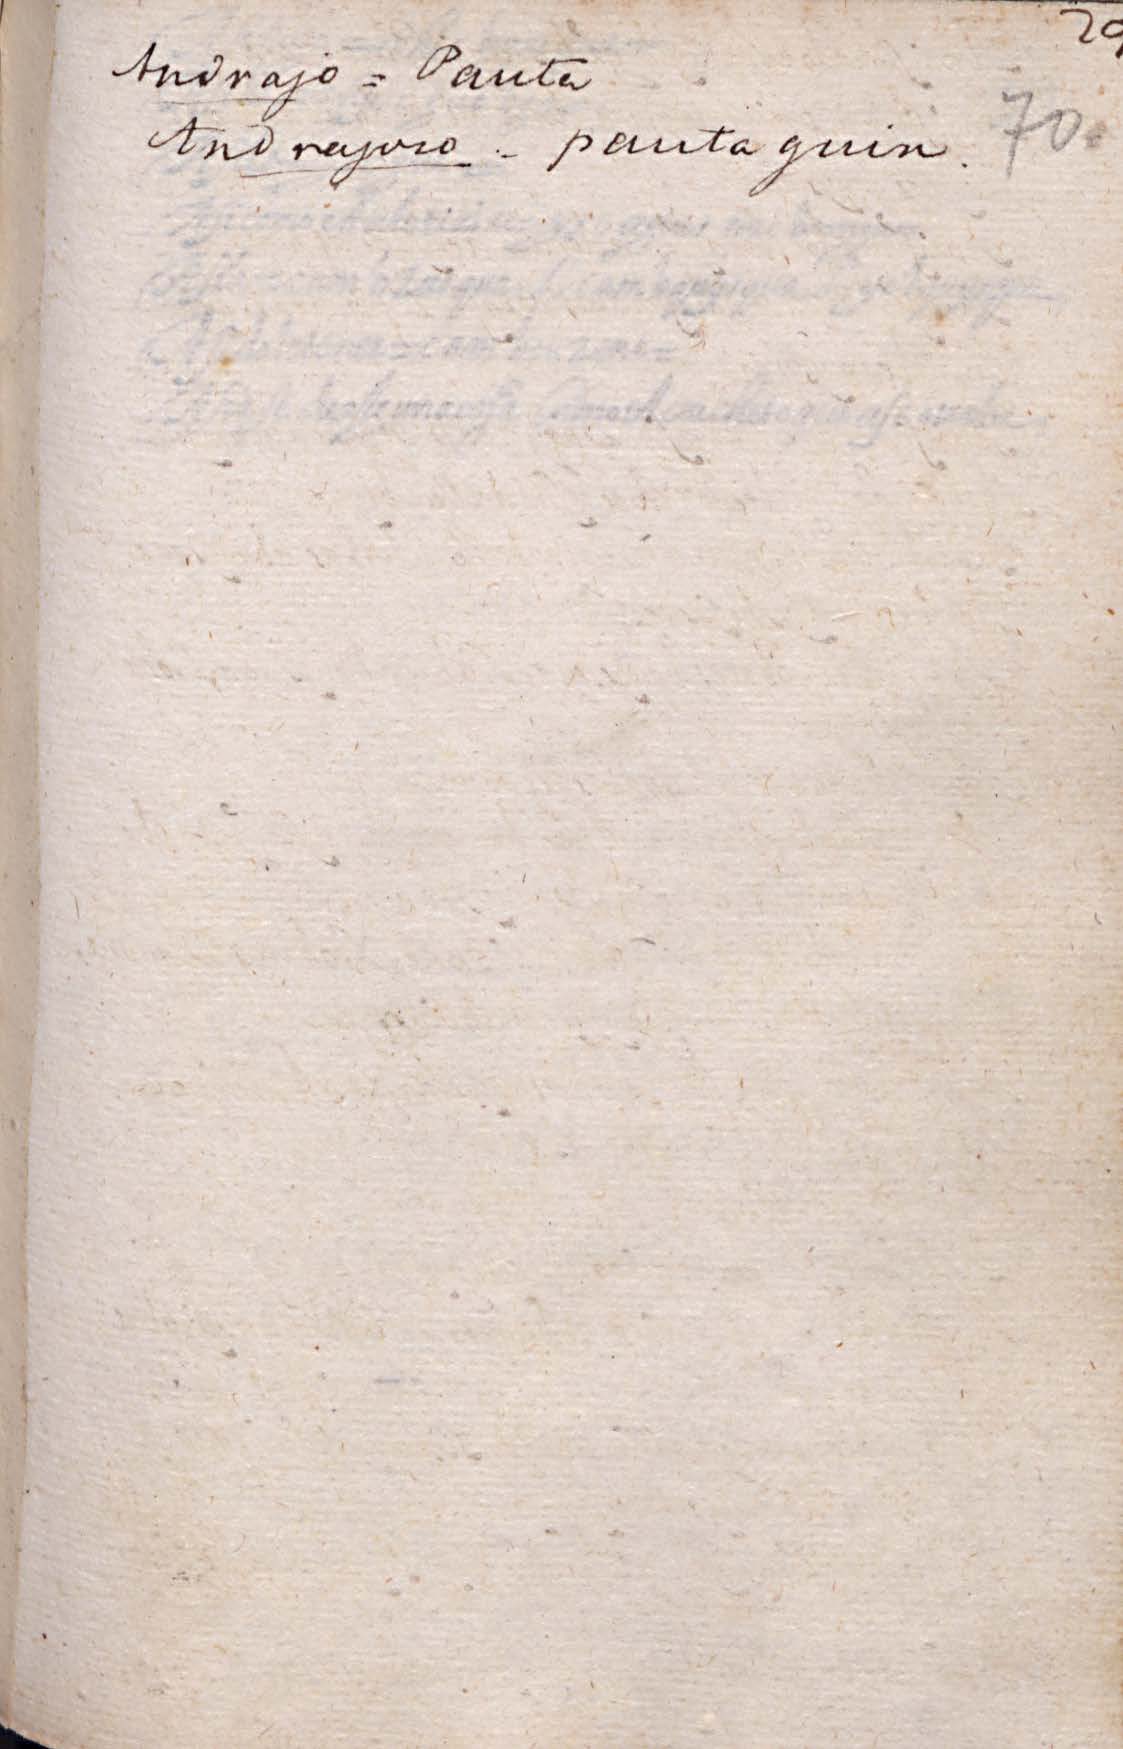 Manuscrito 158 BNC Vocabulario - fol 29r.jpg